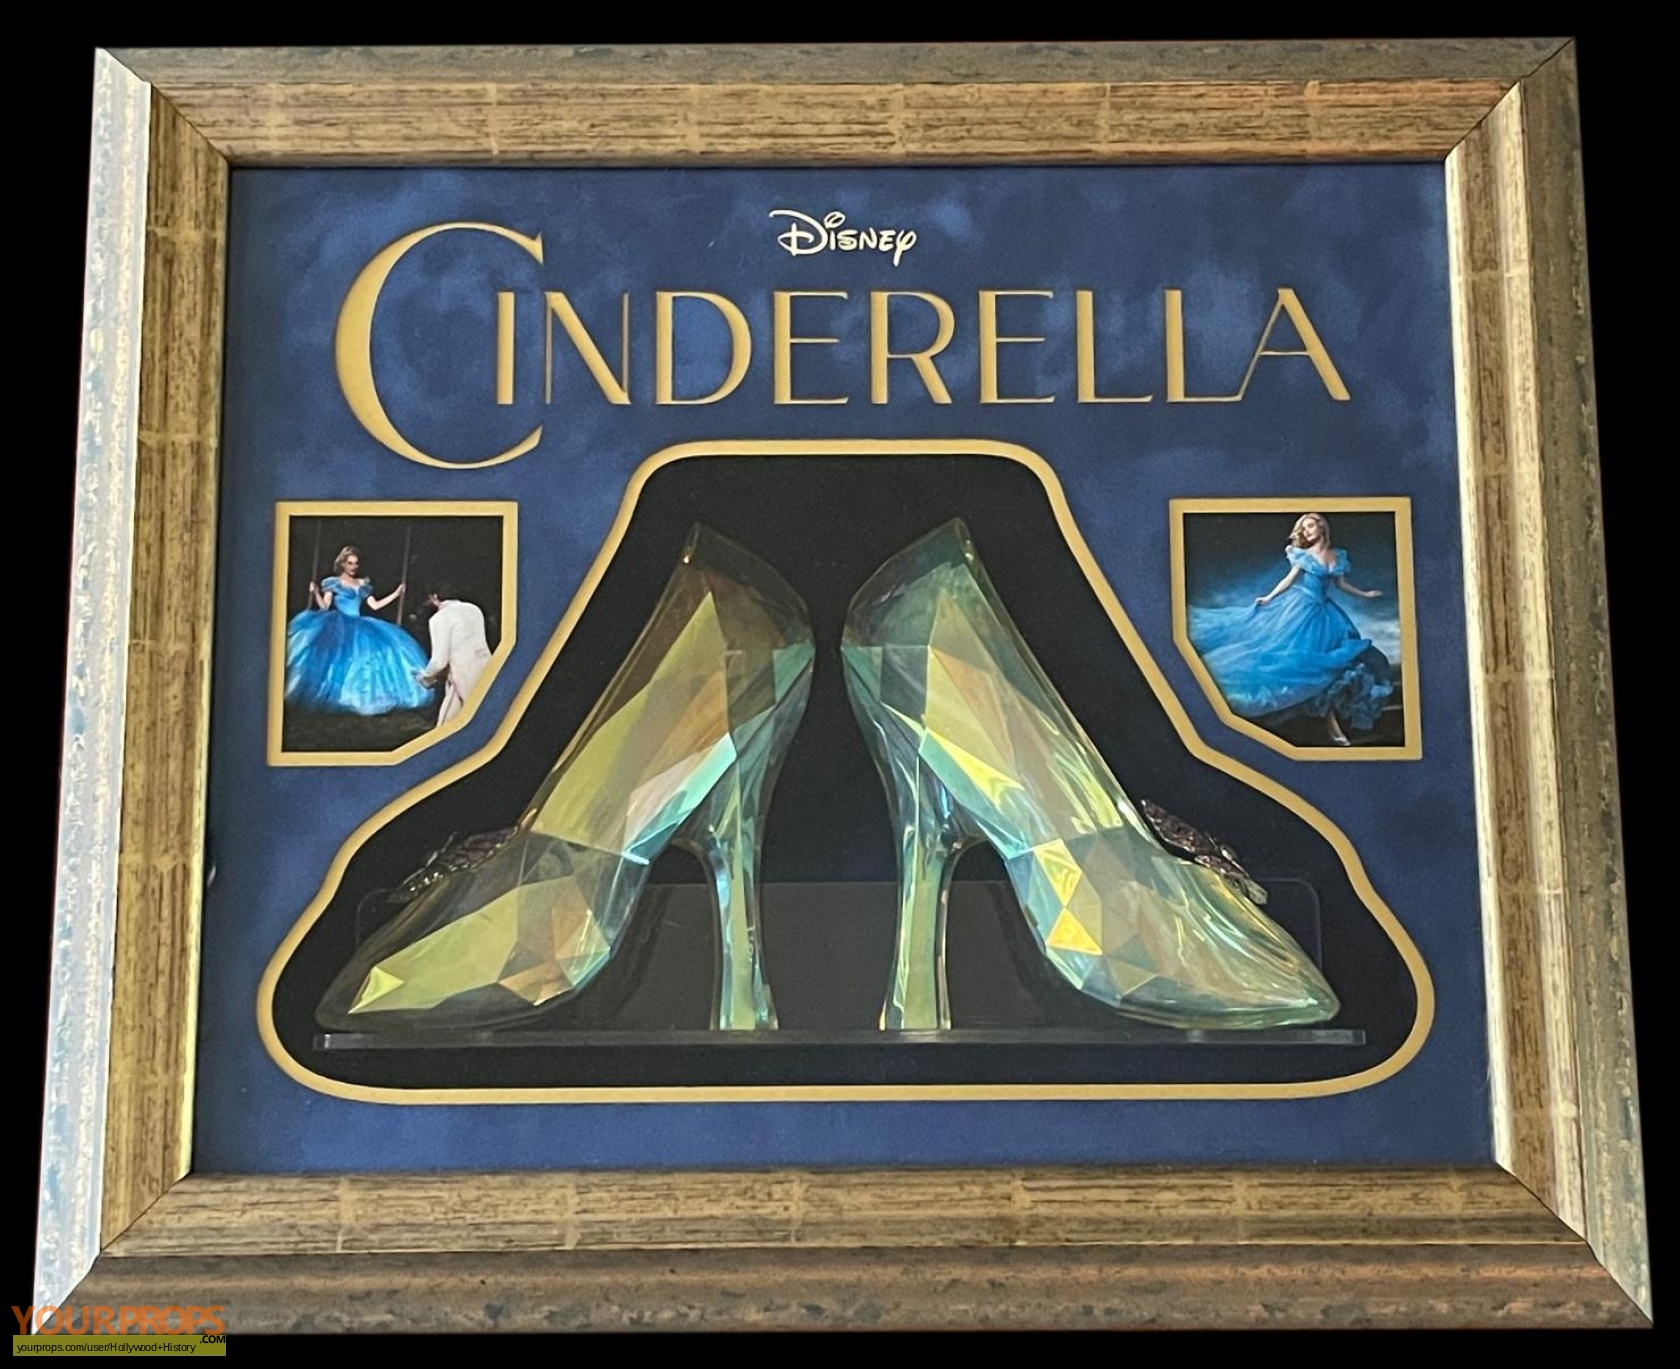 Share 85+ cinderella 2015 glass slipper best - dedaotaonec